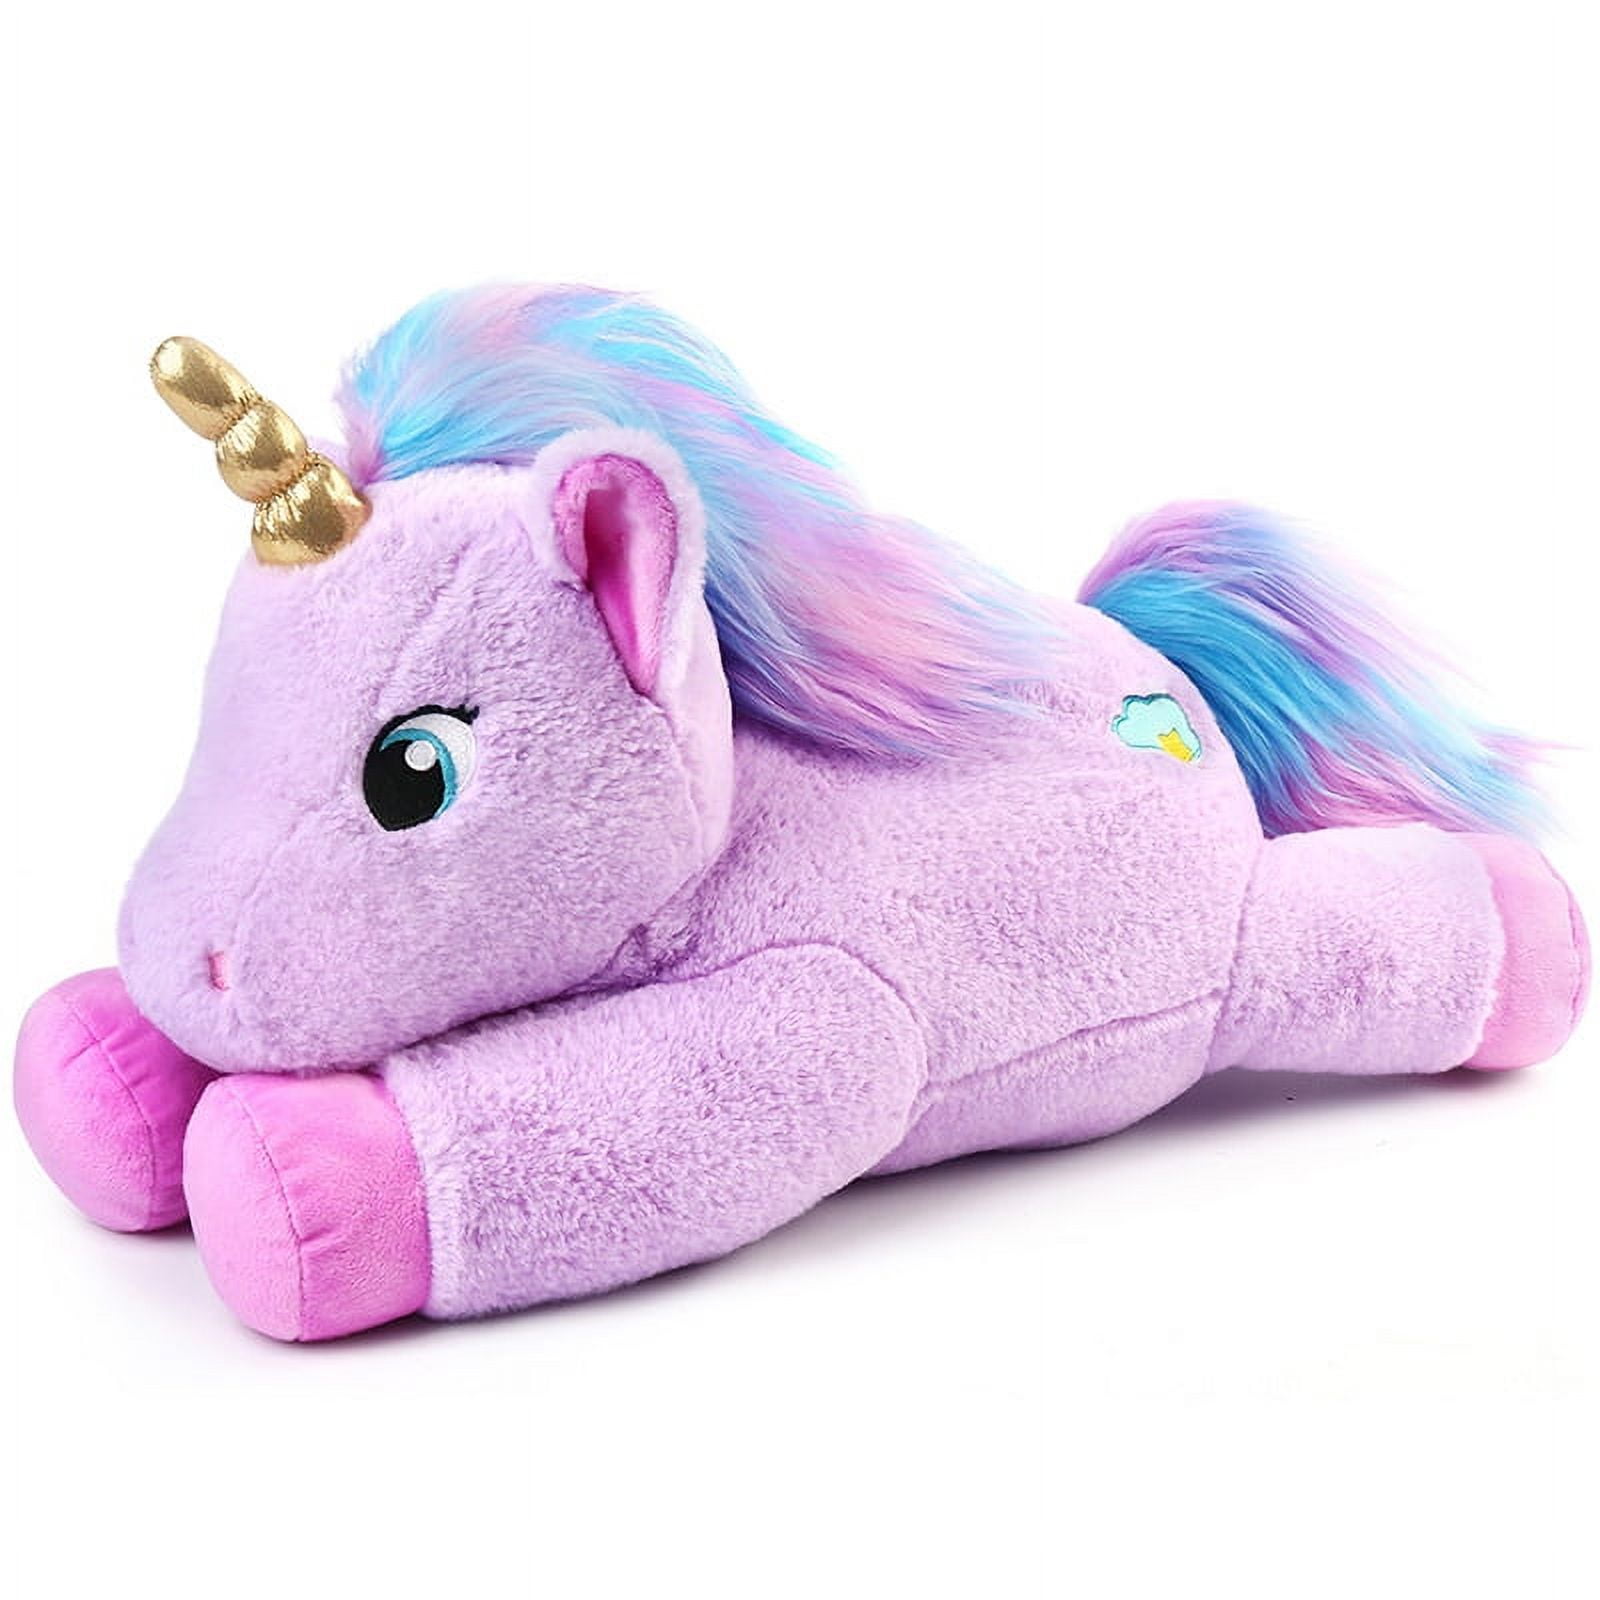 LotFancy 7 in White Unicorn Stuffed Animal Plush Toys for Girls